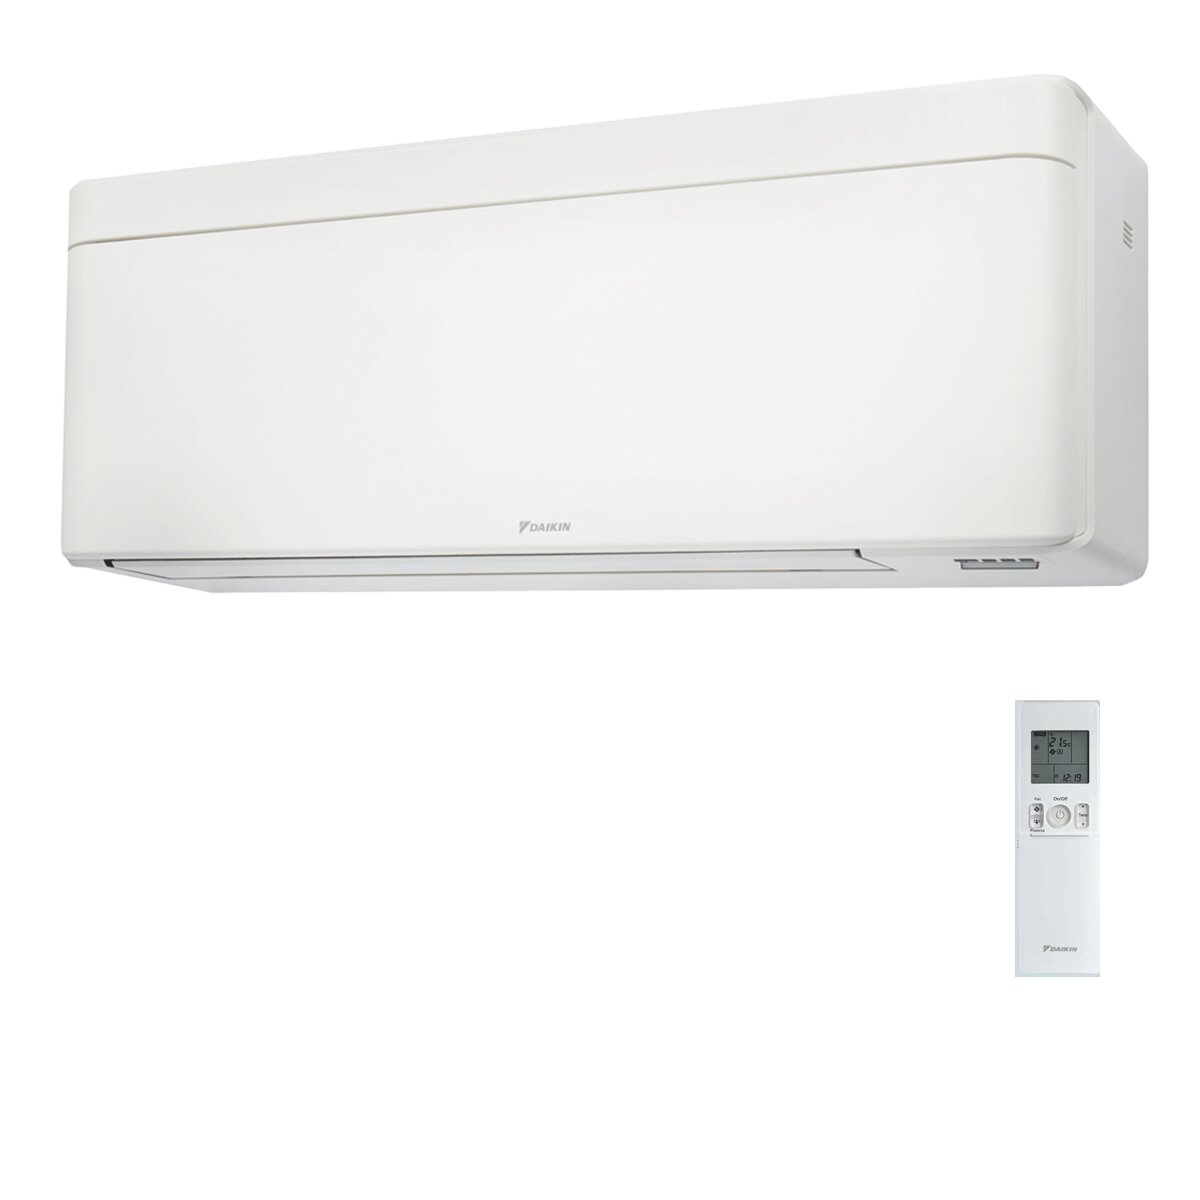 Daikin Stylish White quadri split air conditioner 7000+9000+9000+18000 BTU inverter A++ wifi external unit 7.4 kW